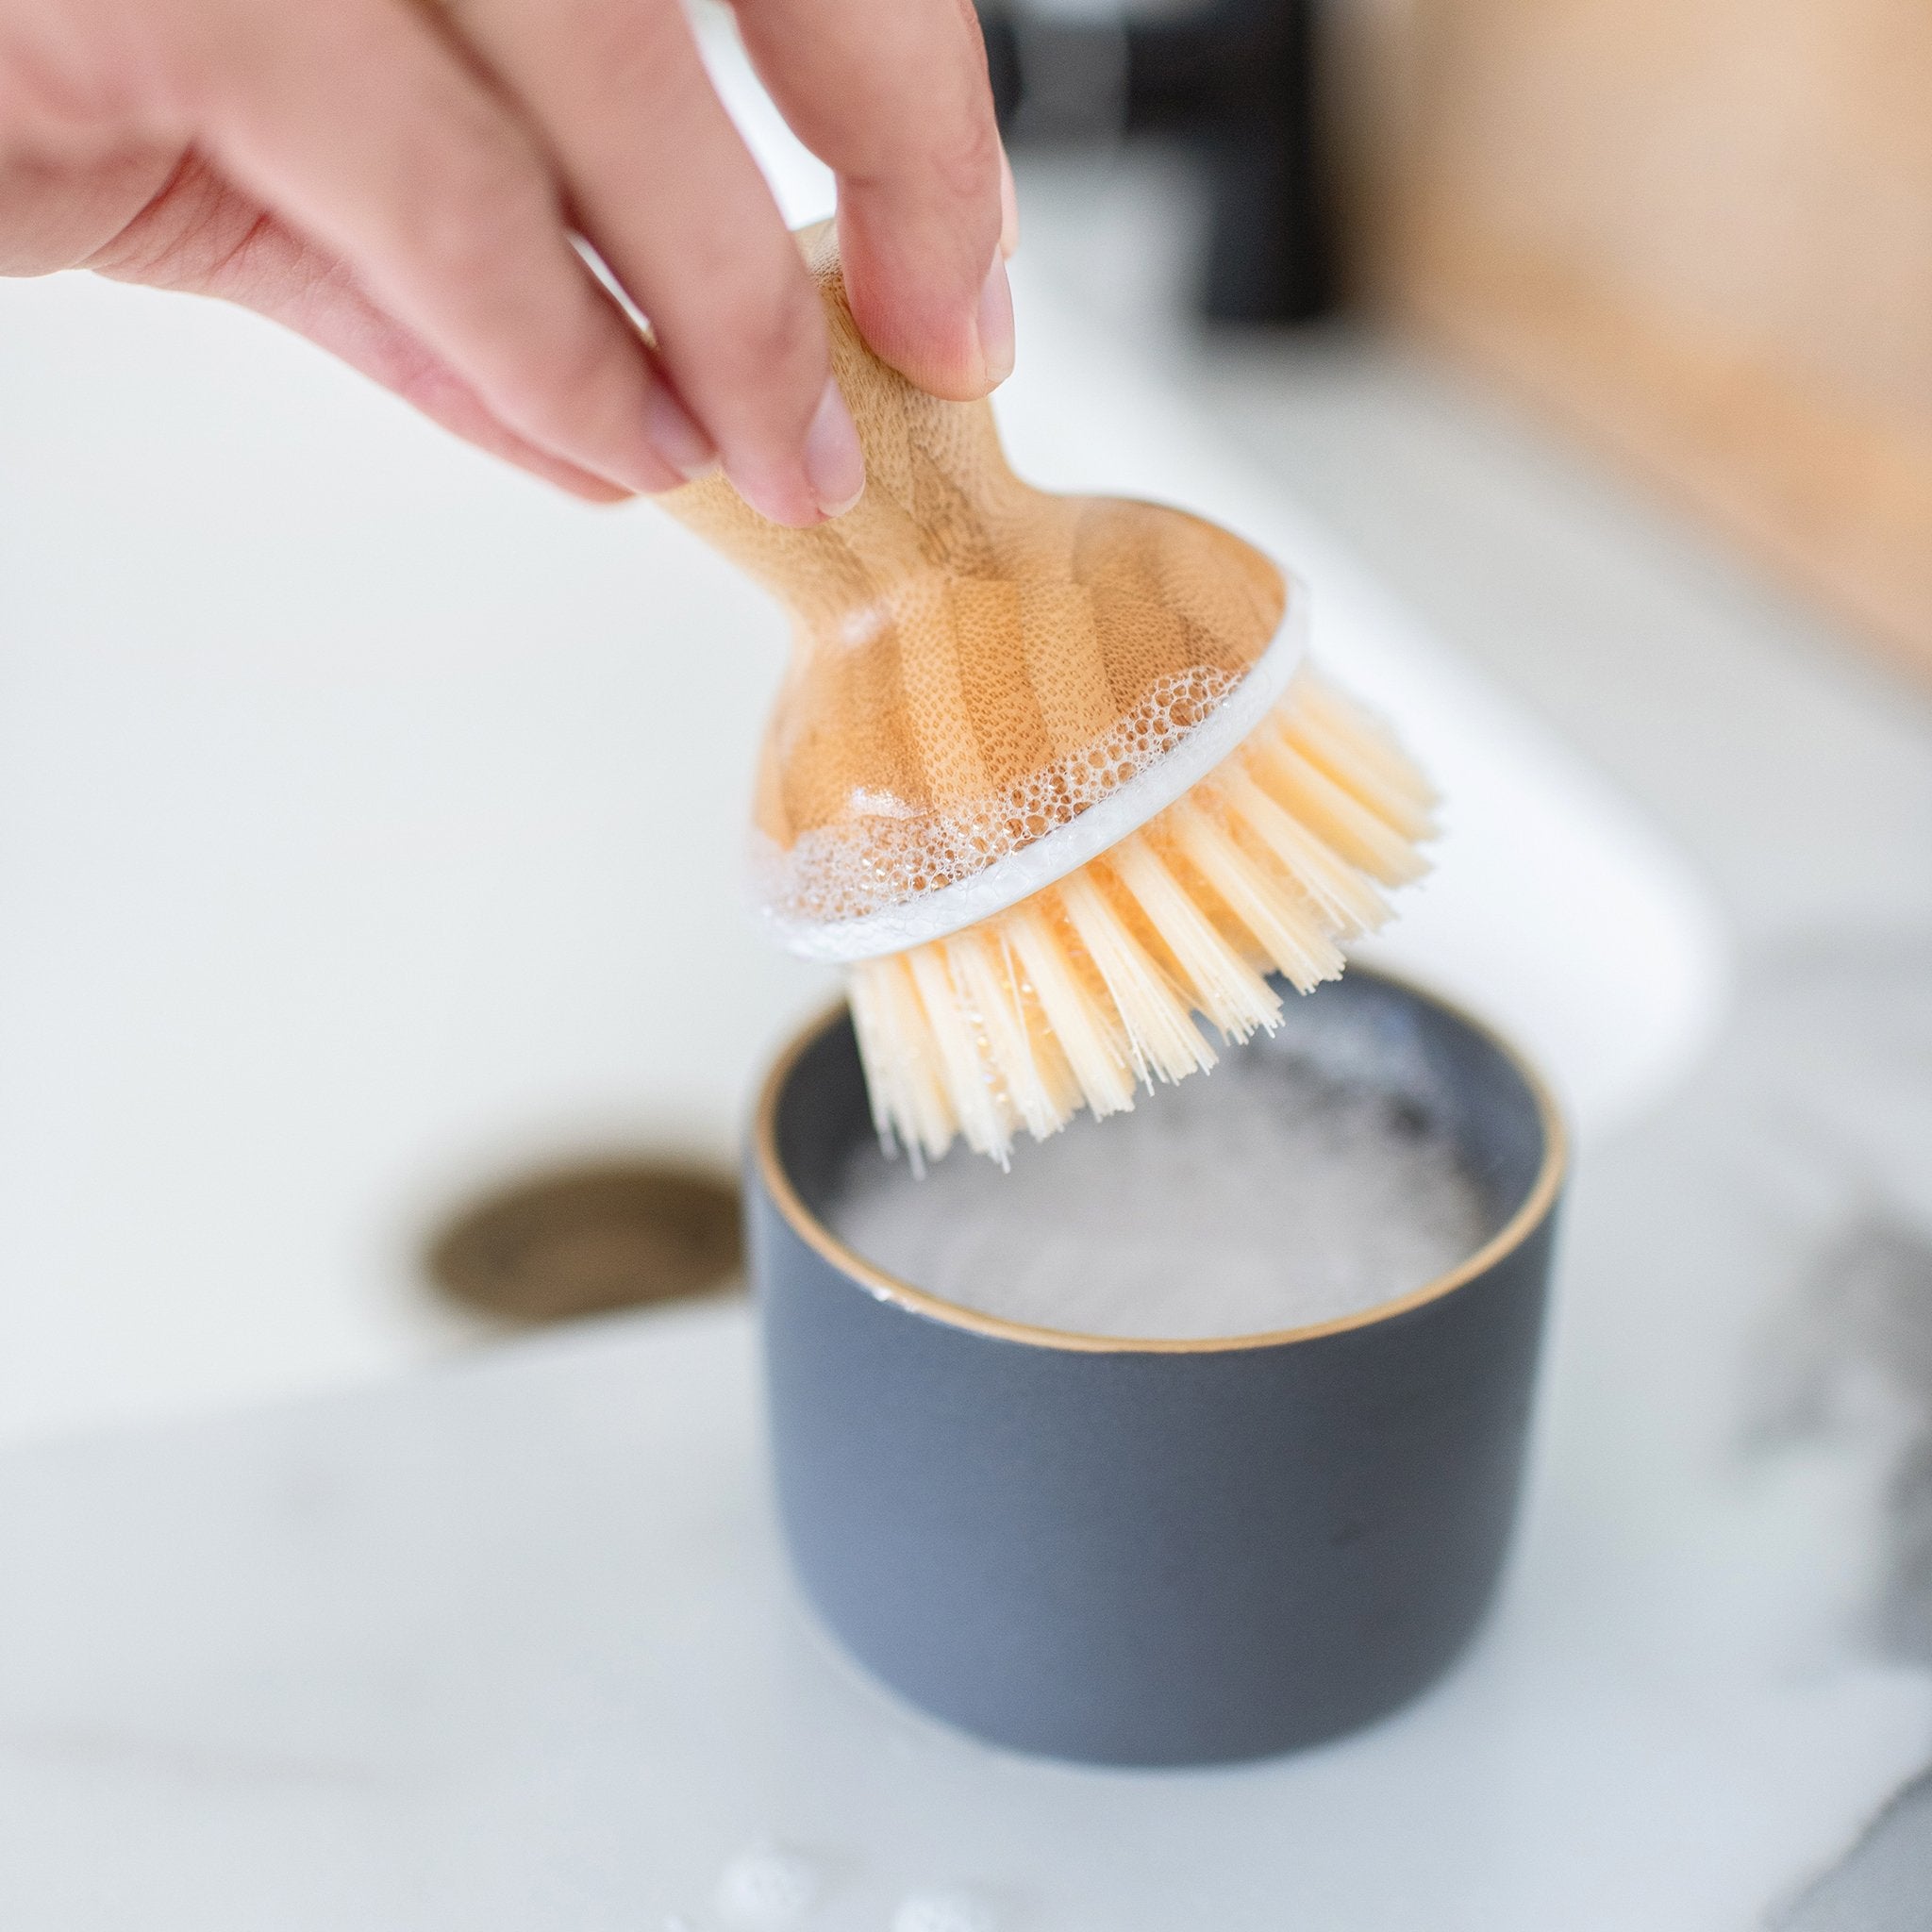 Dishwashing Brush Dish Scrub Brush Kitchen Dish Scrubber Bubble Up Brushes  with Soap Dispenser for Vegetable Utensils Cleaning